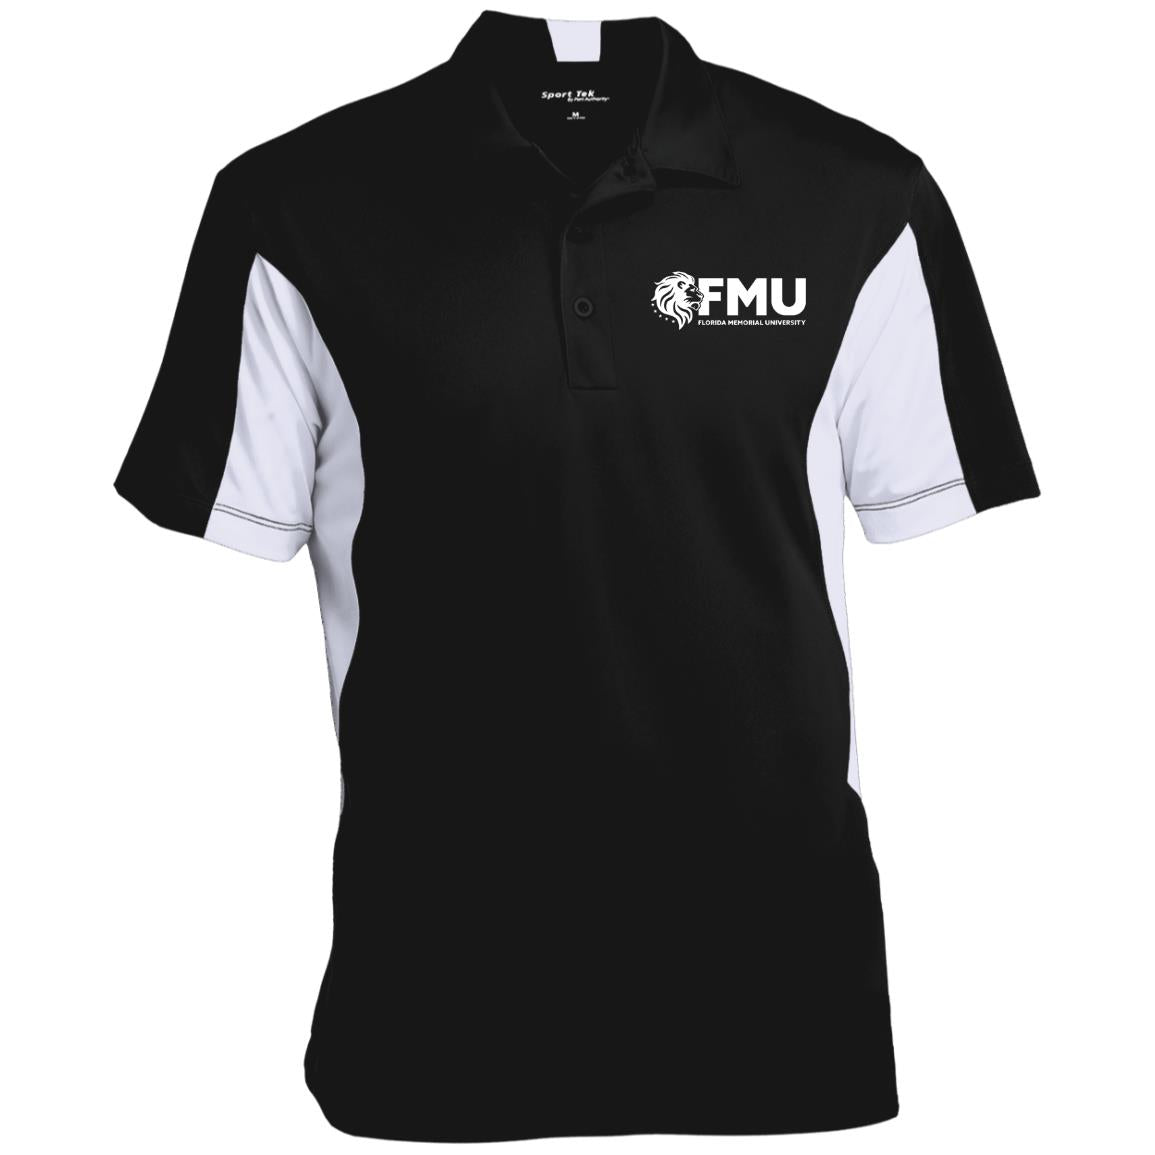 FMU Men's Color block Performance Polo